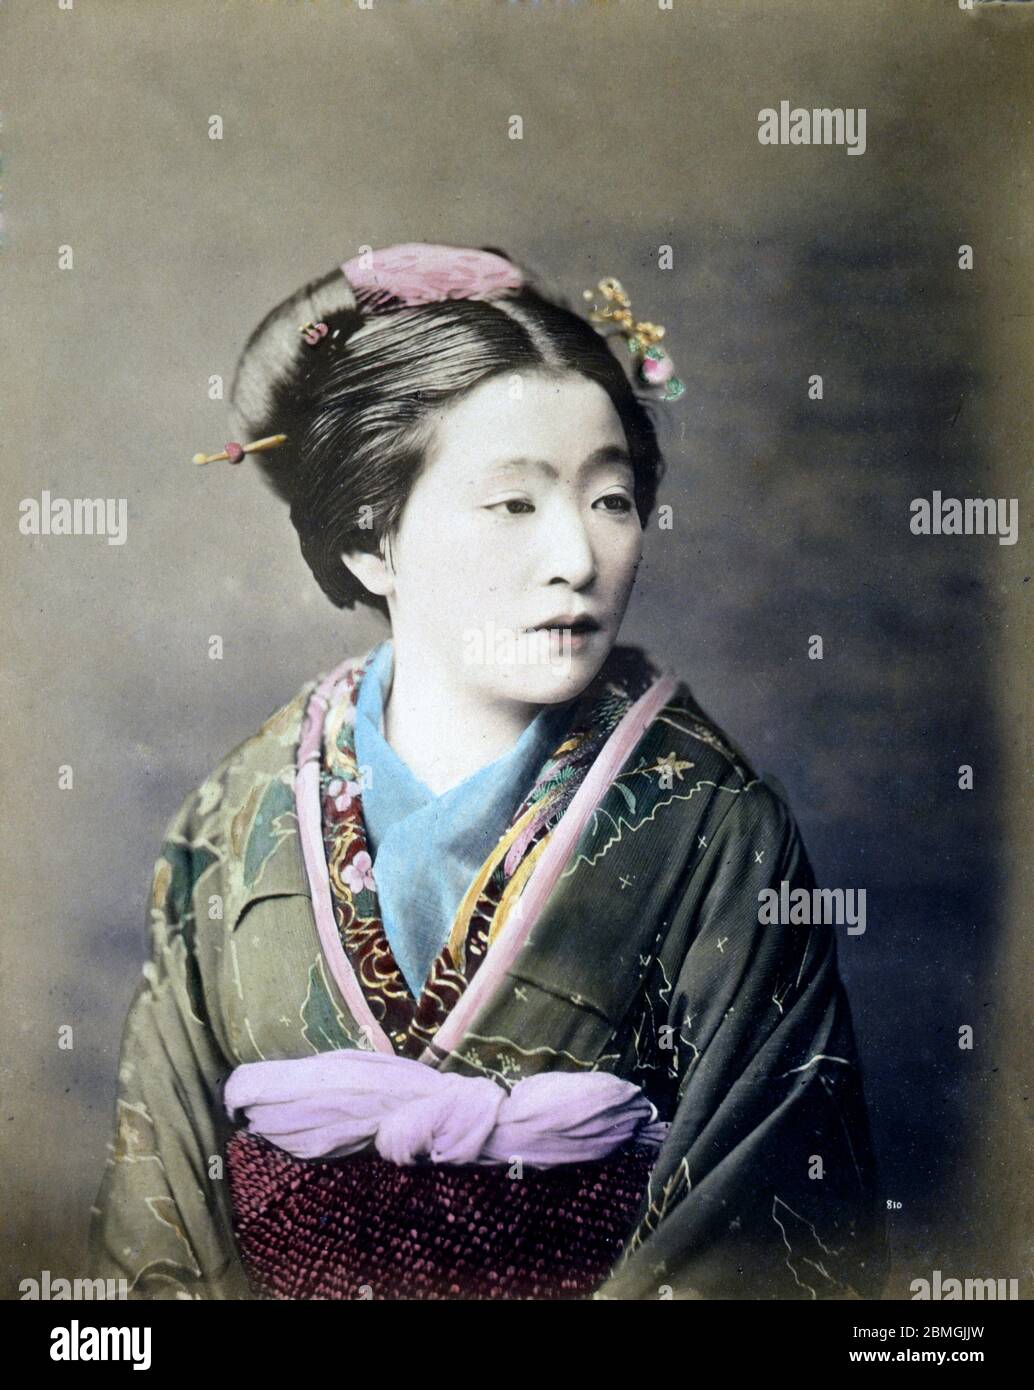 [ 1880er Japan - Japanische Frau im Kimono ] - Frau im Kimono und traditionelle Frisur. Vintage Albumin-Fotografie aus dem 19. Jahrhundert. Stockfoto